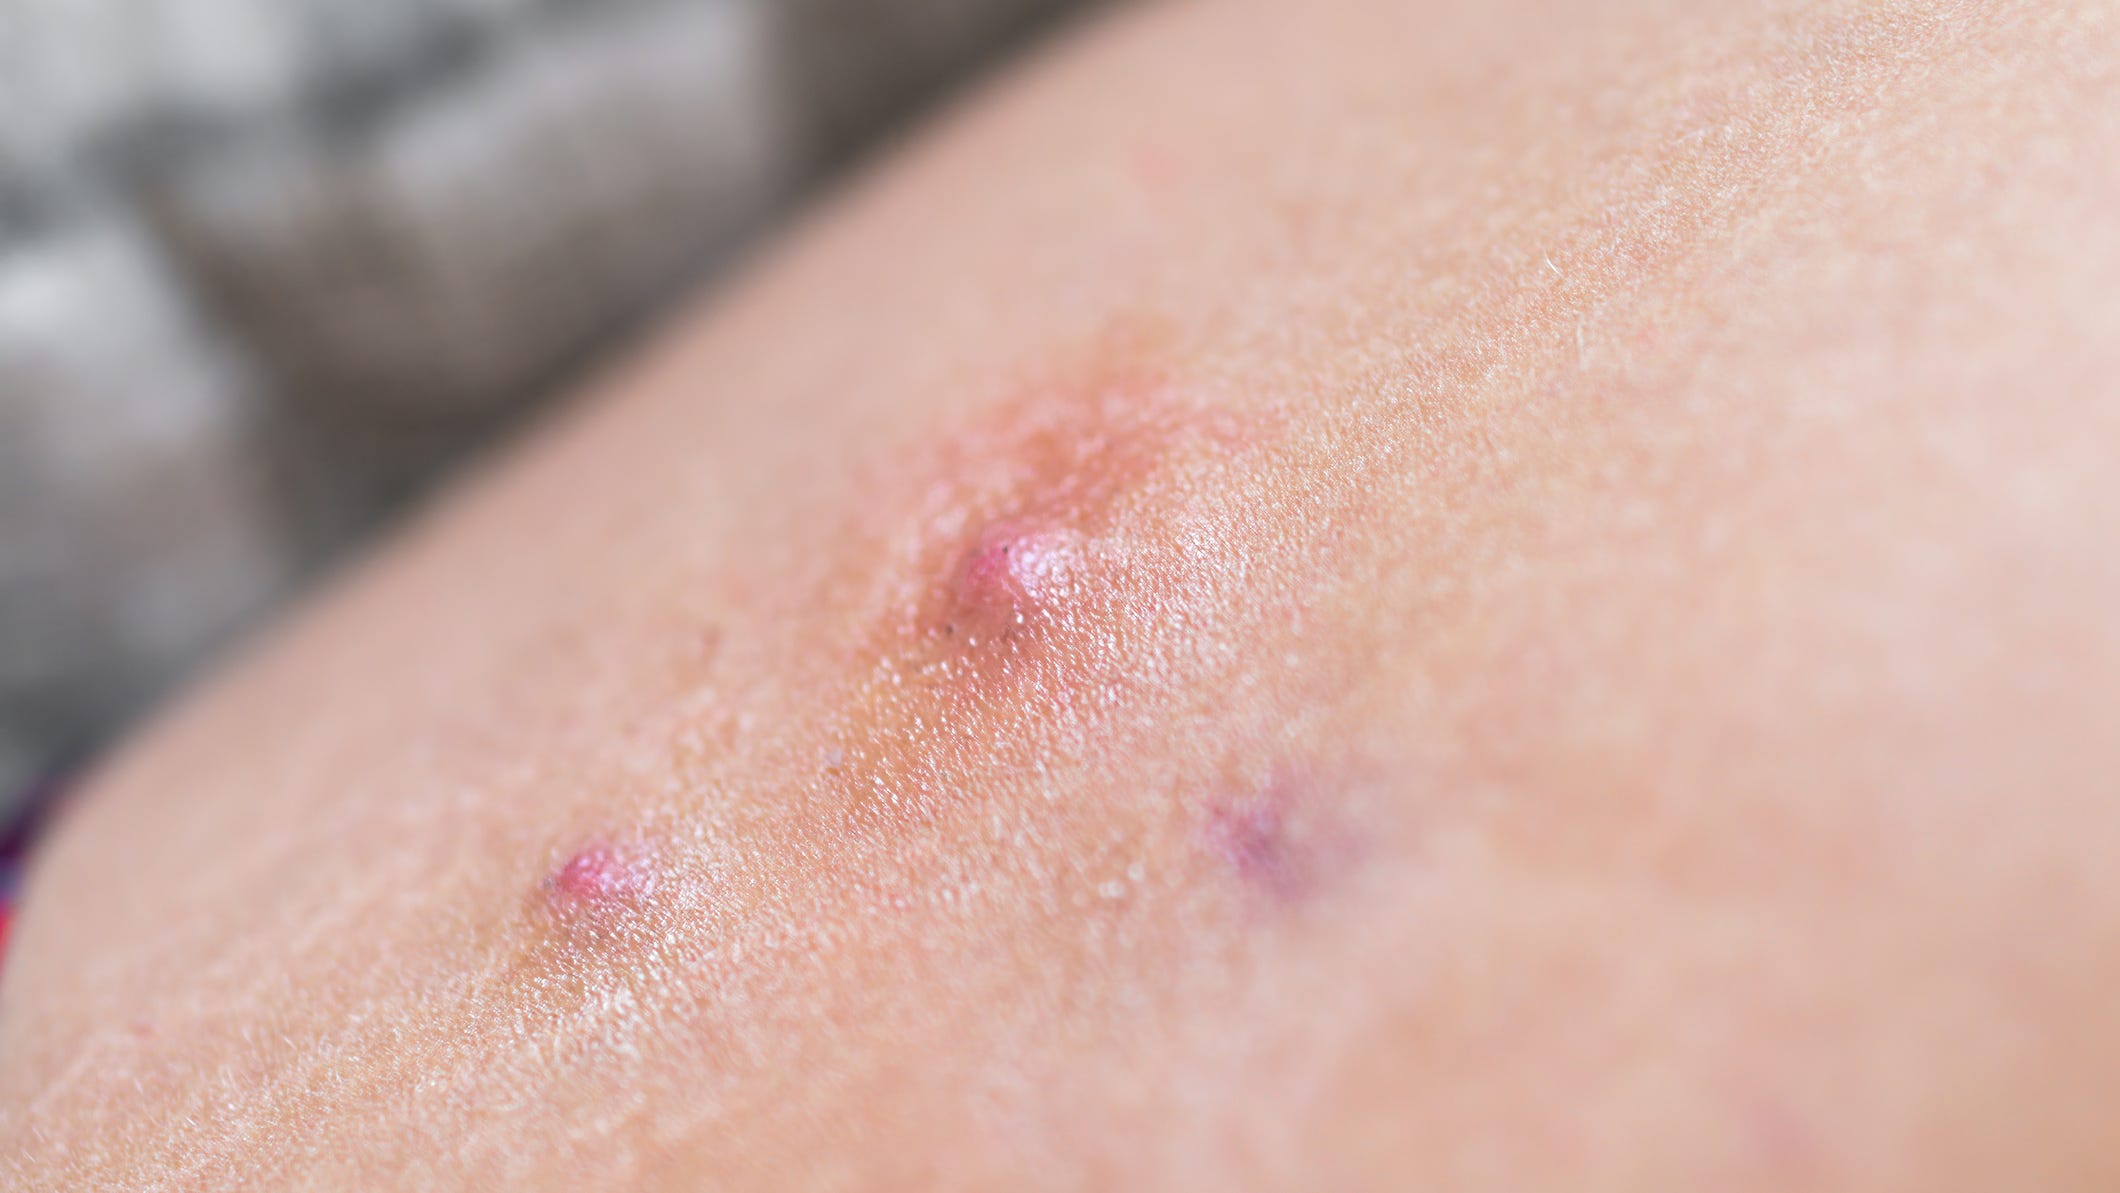 Red bumps may be inflammatory Hidradenitis suppurative